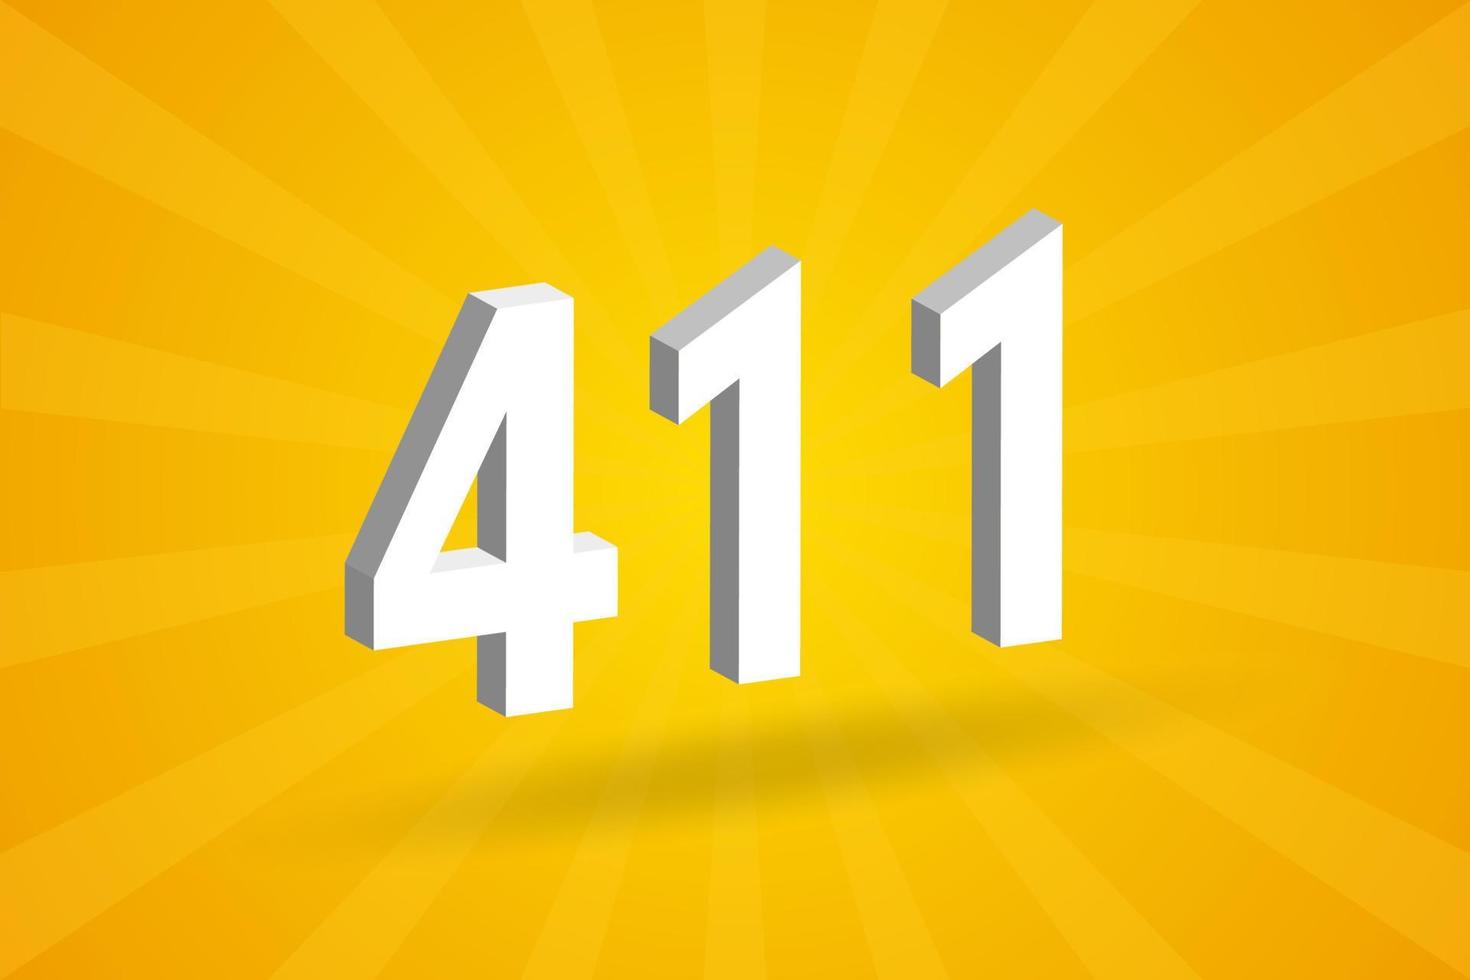 3d 411 siffra font alfabet. vit 3d siffra 411 med gul bakgrund vektor